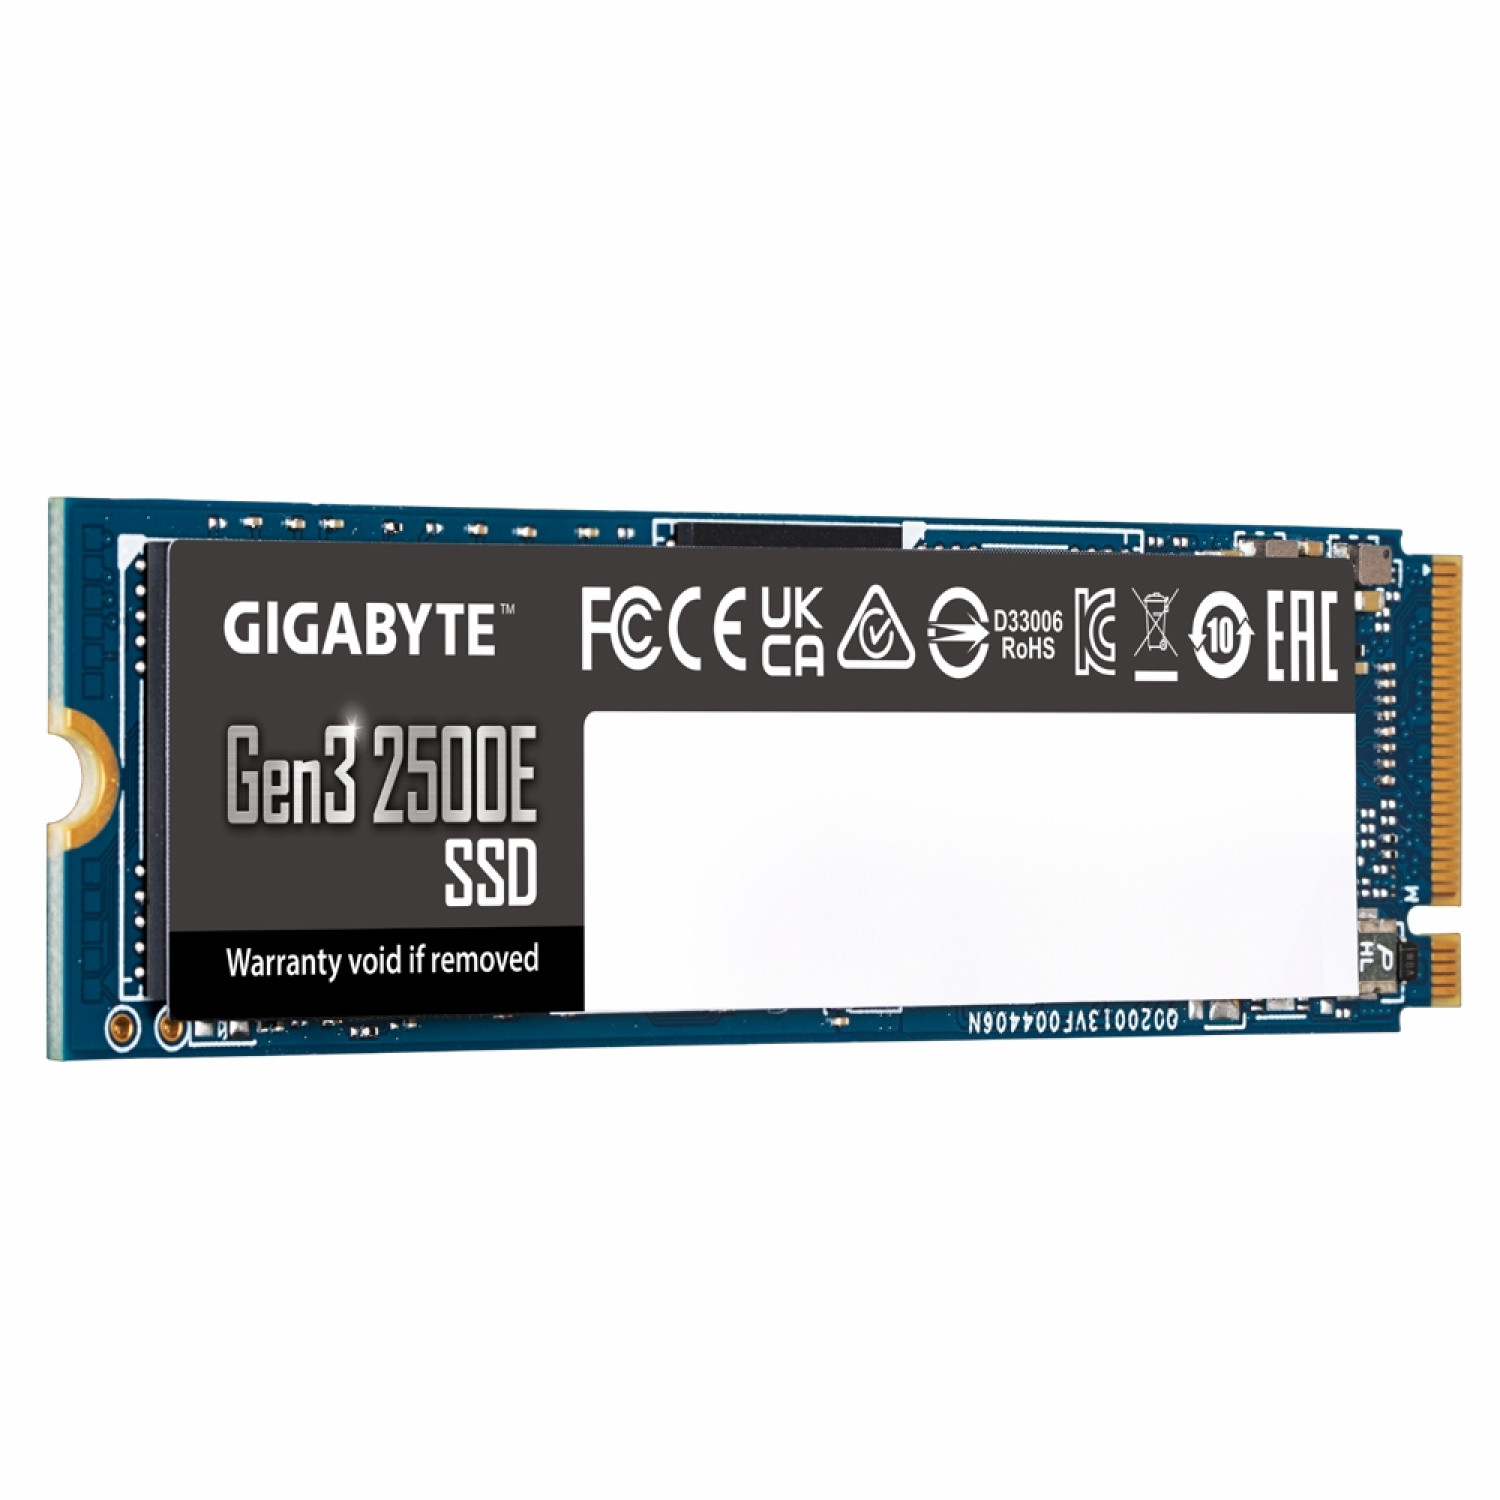 حافظه اس اس دی Gigabyte Gen3 2500E 1TB-3